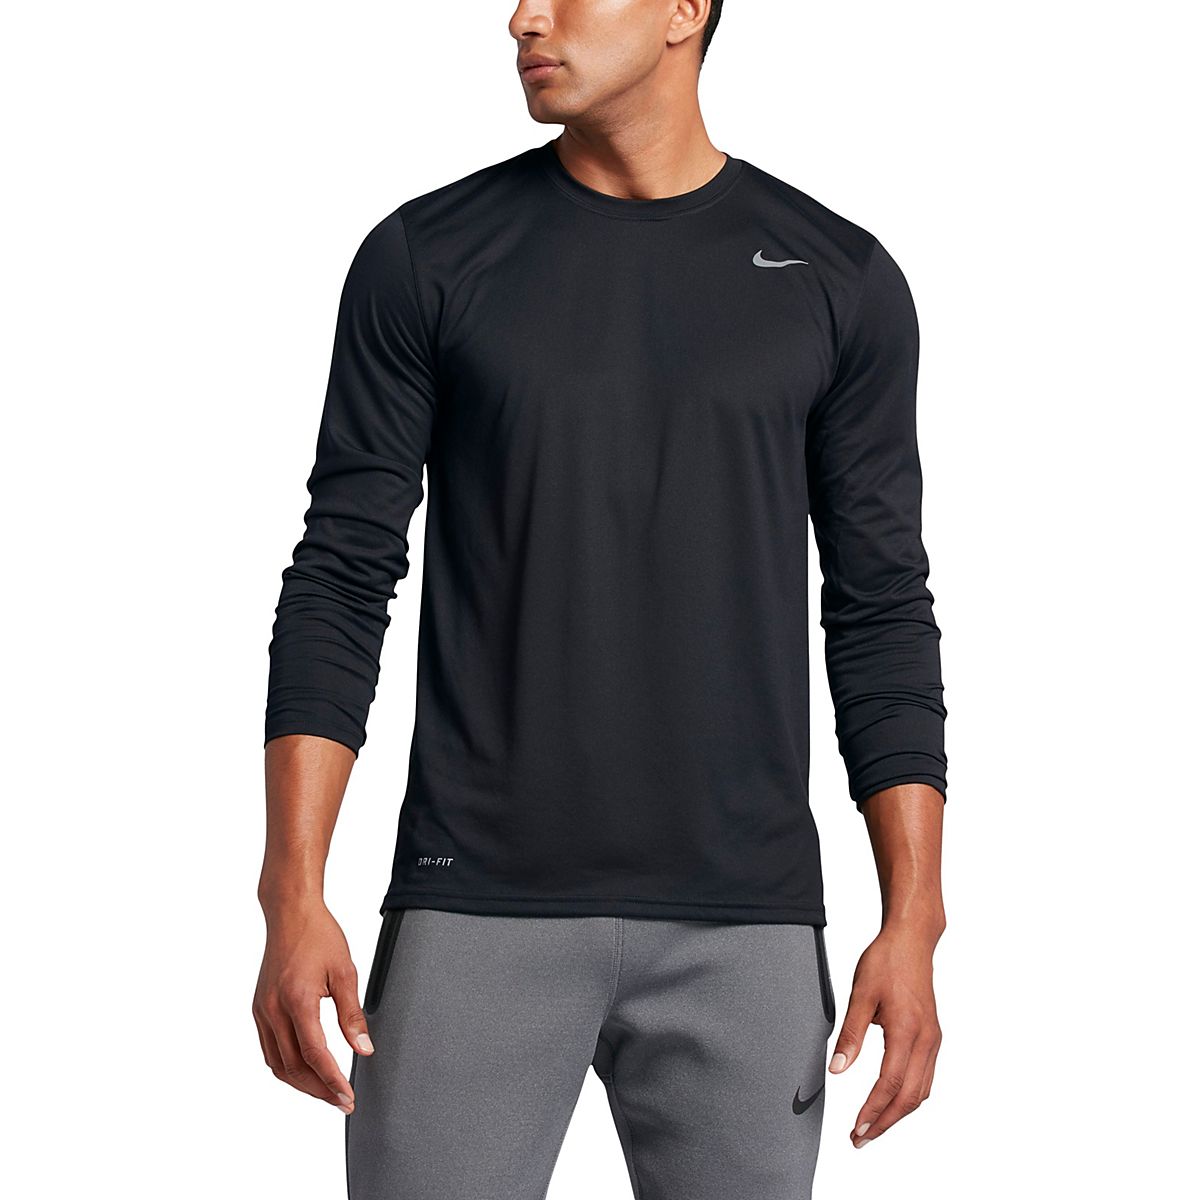 Amoroso versus Complicado Nike Men's Legend 2.0 Training Long Sleeve Shirt | Academy